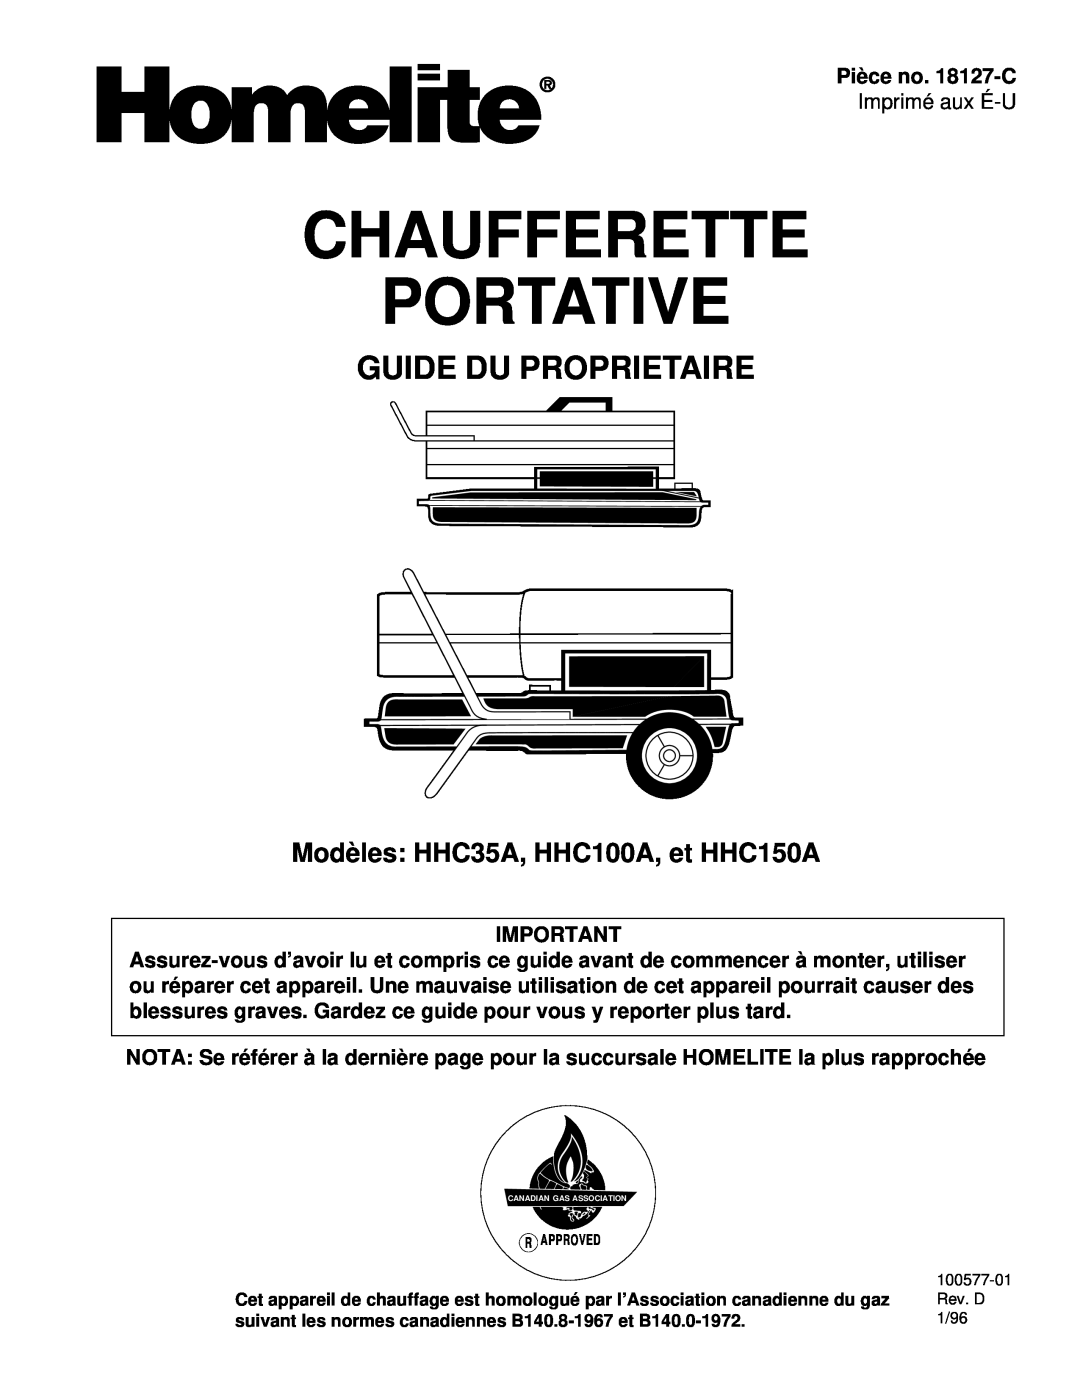 Homelite owner manual Chaufferette Portative, Guide Du Proprietaire, Modè les HHC35A, HHC100A, et HHC150A 